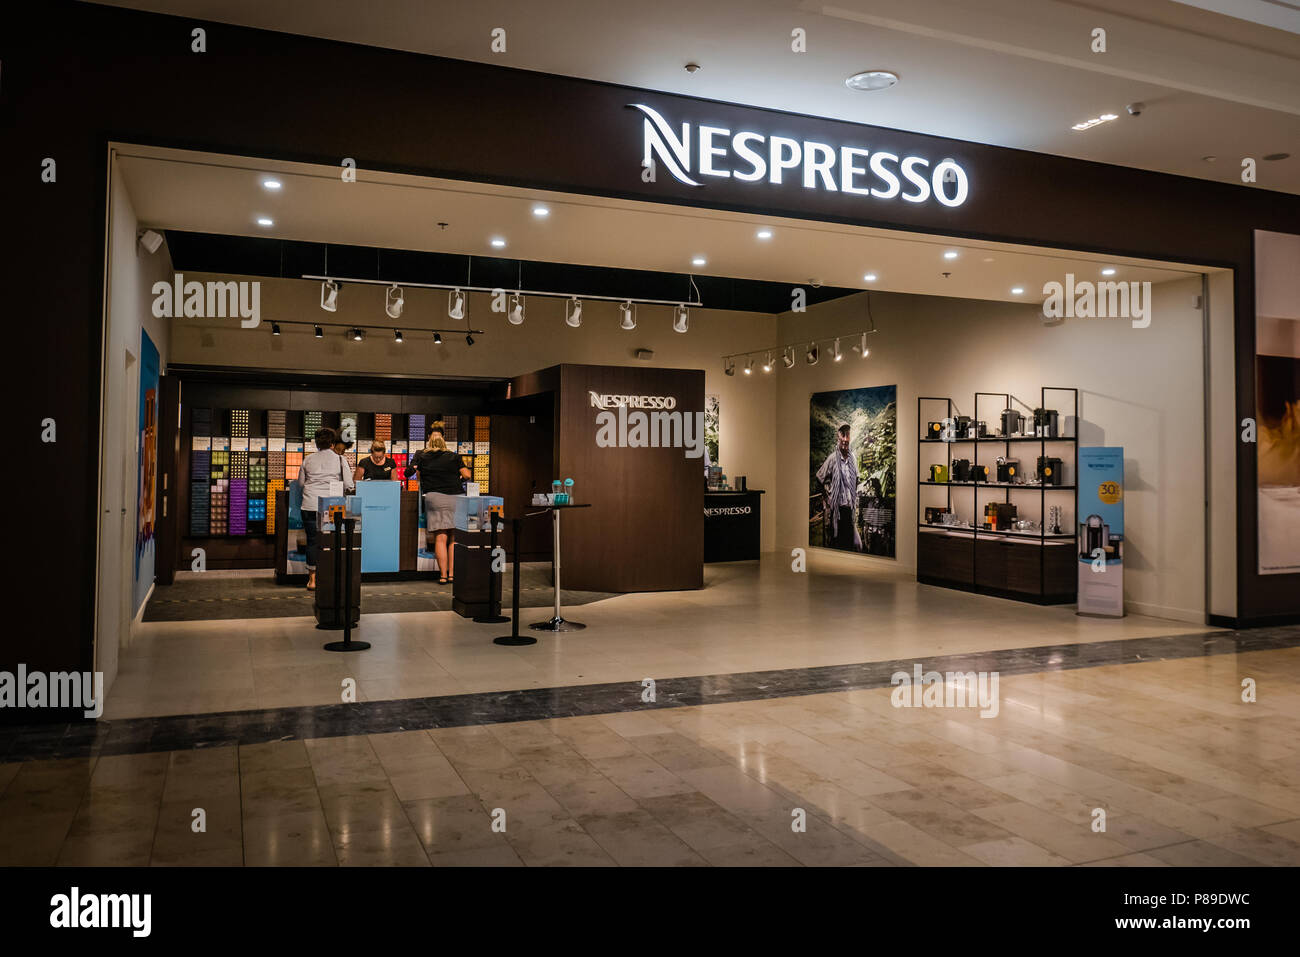 Nespresso coffee shop retail store Stock Photo - Alamy